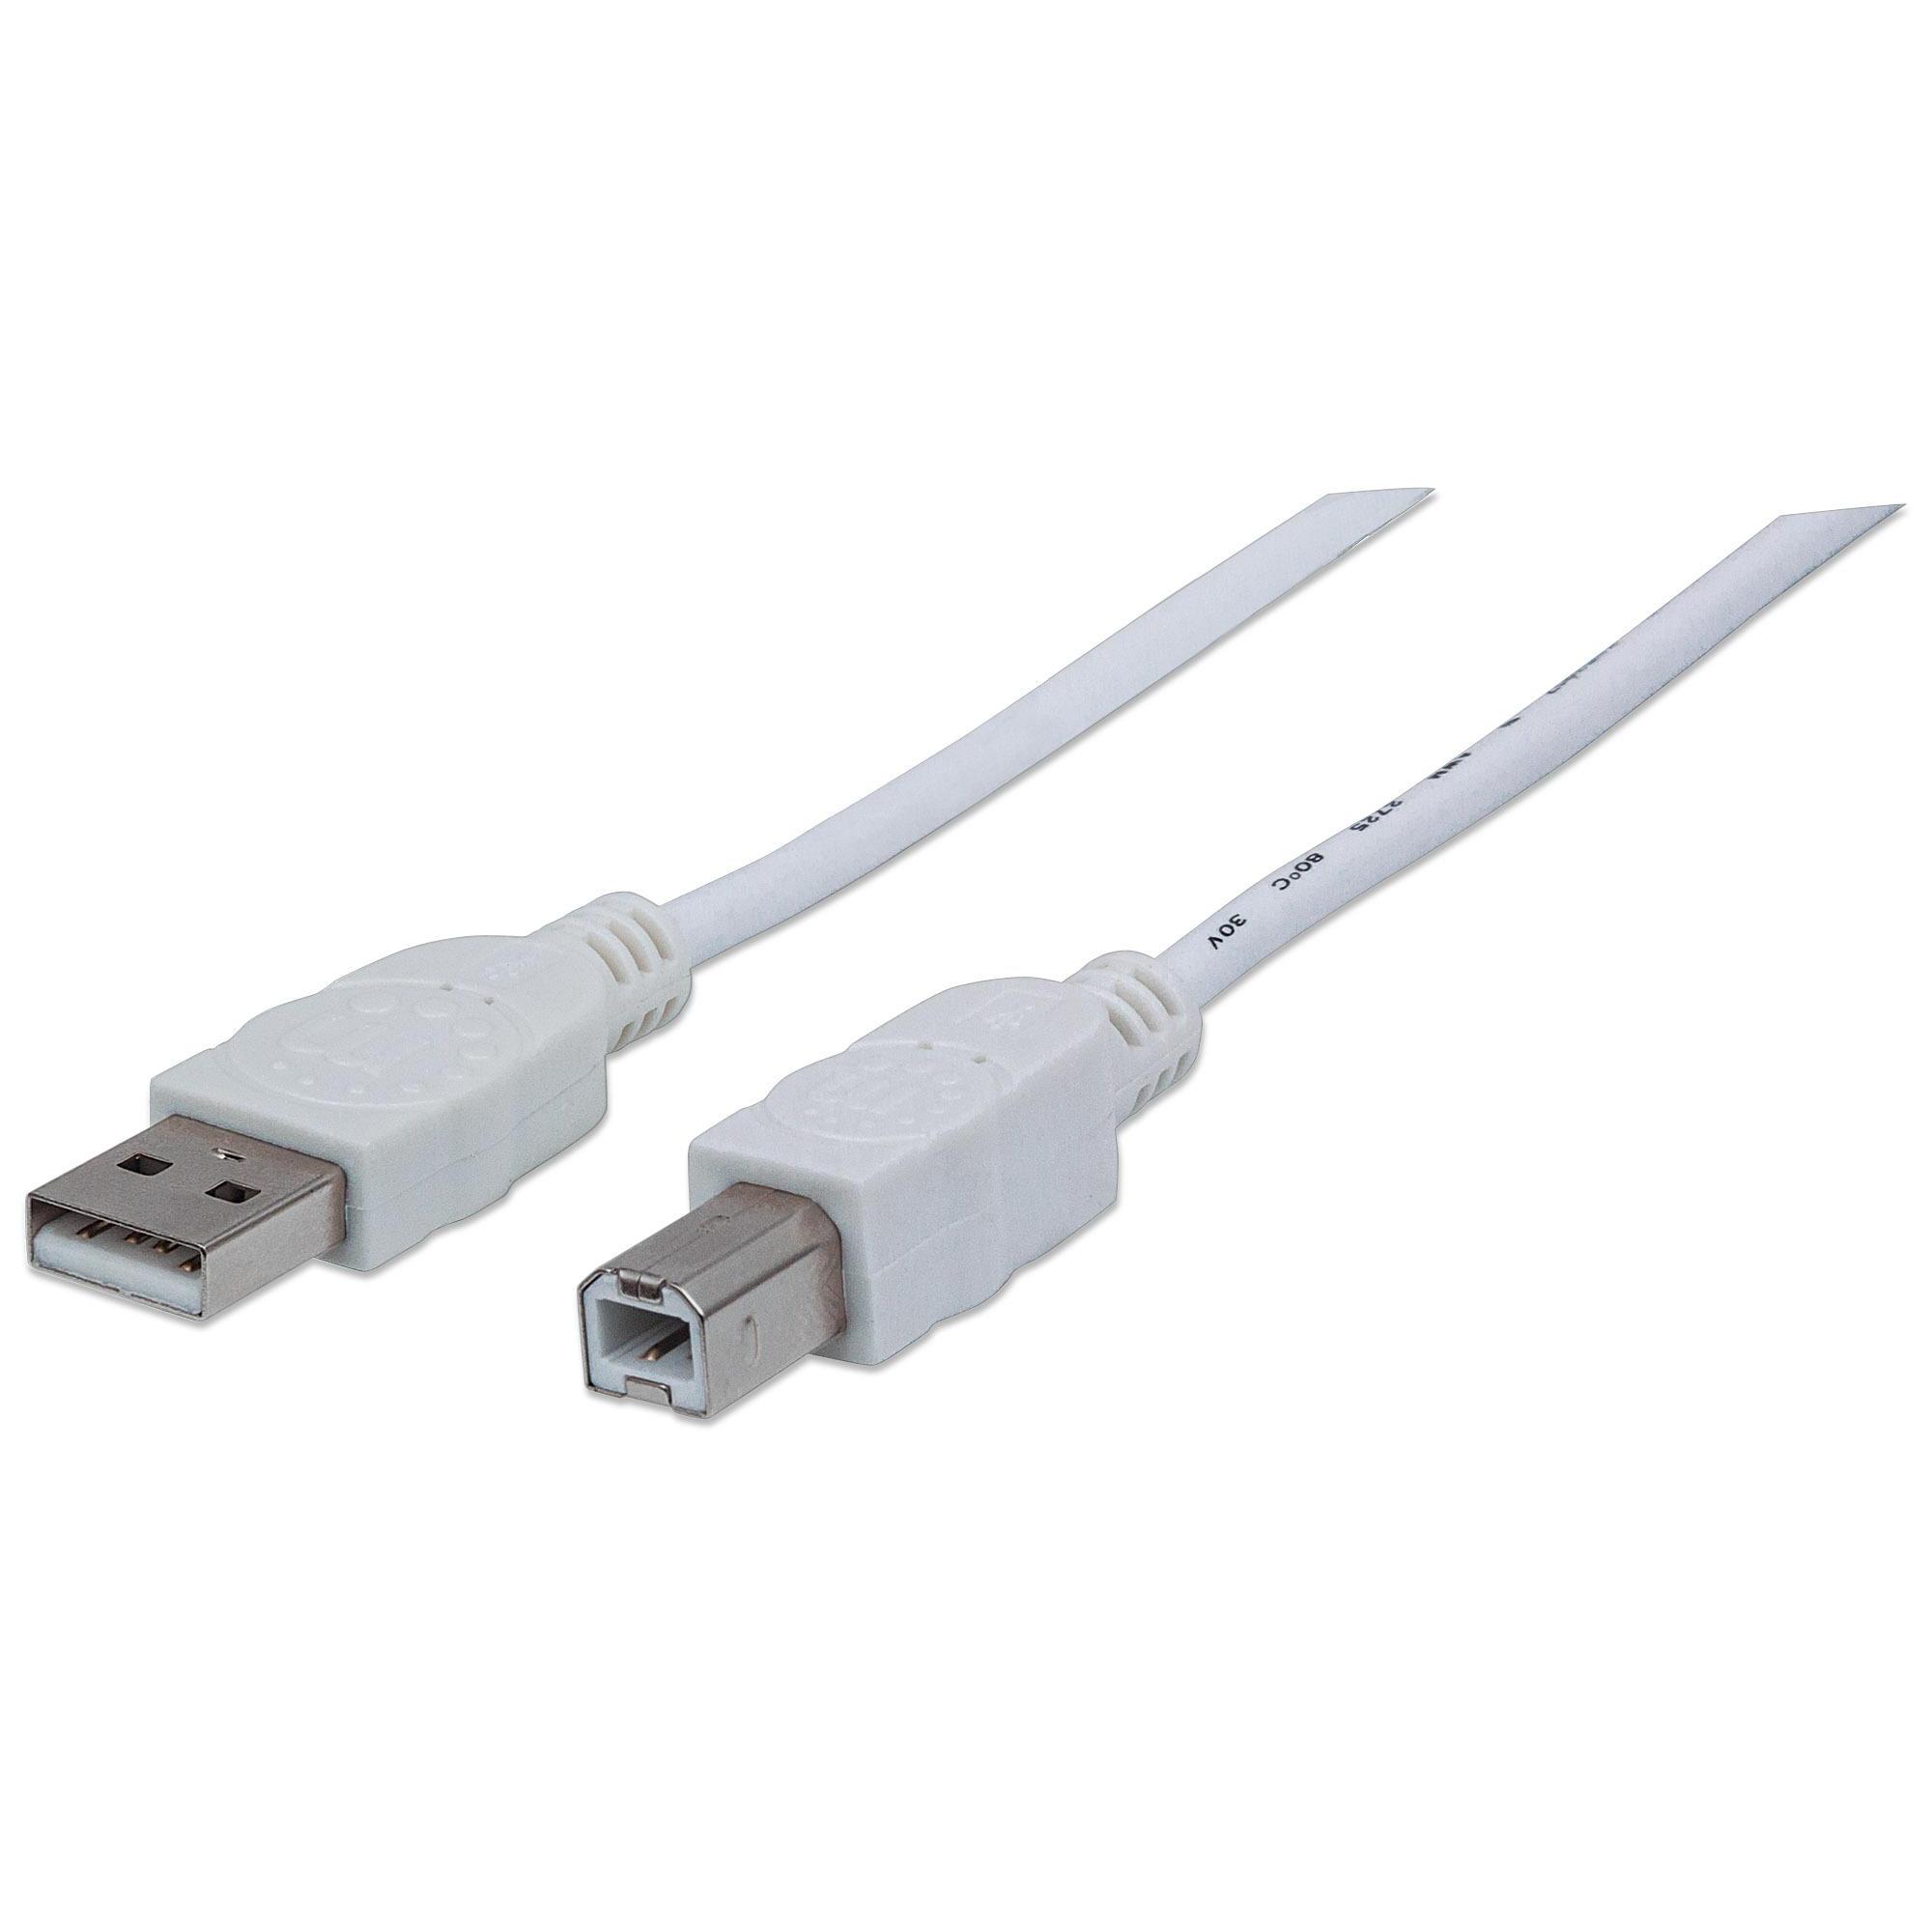 Cavo USB 2.0 A maschio/B maschio 1.8m Bianco